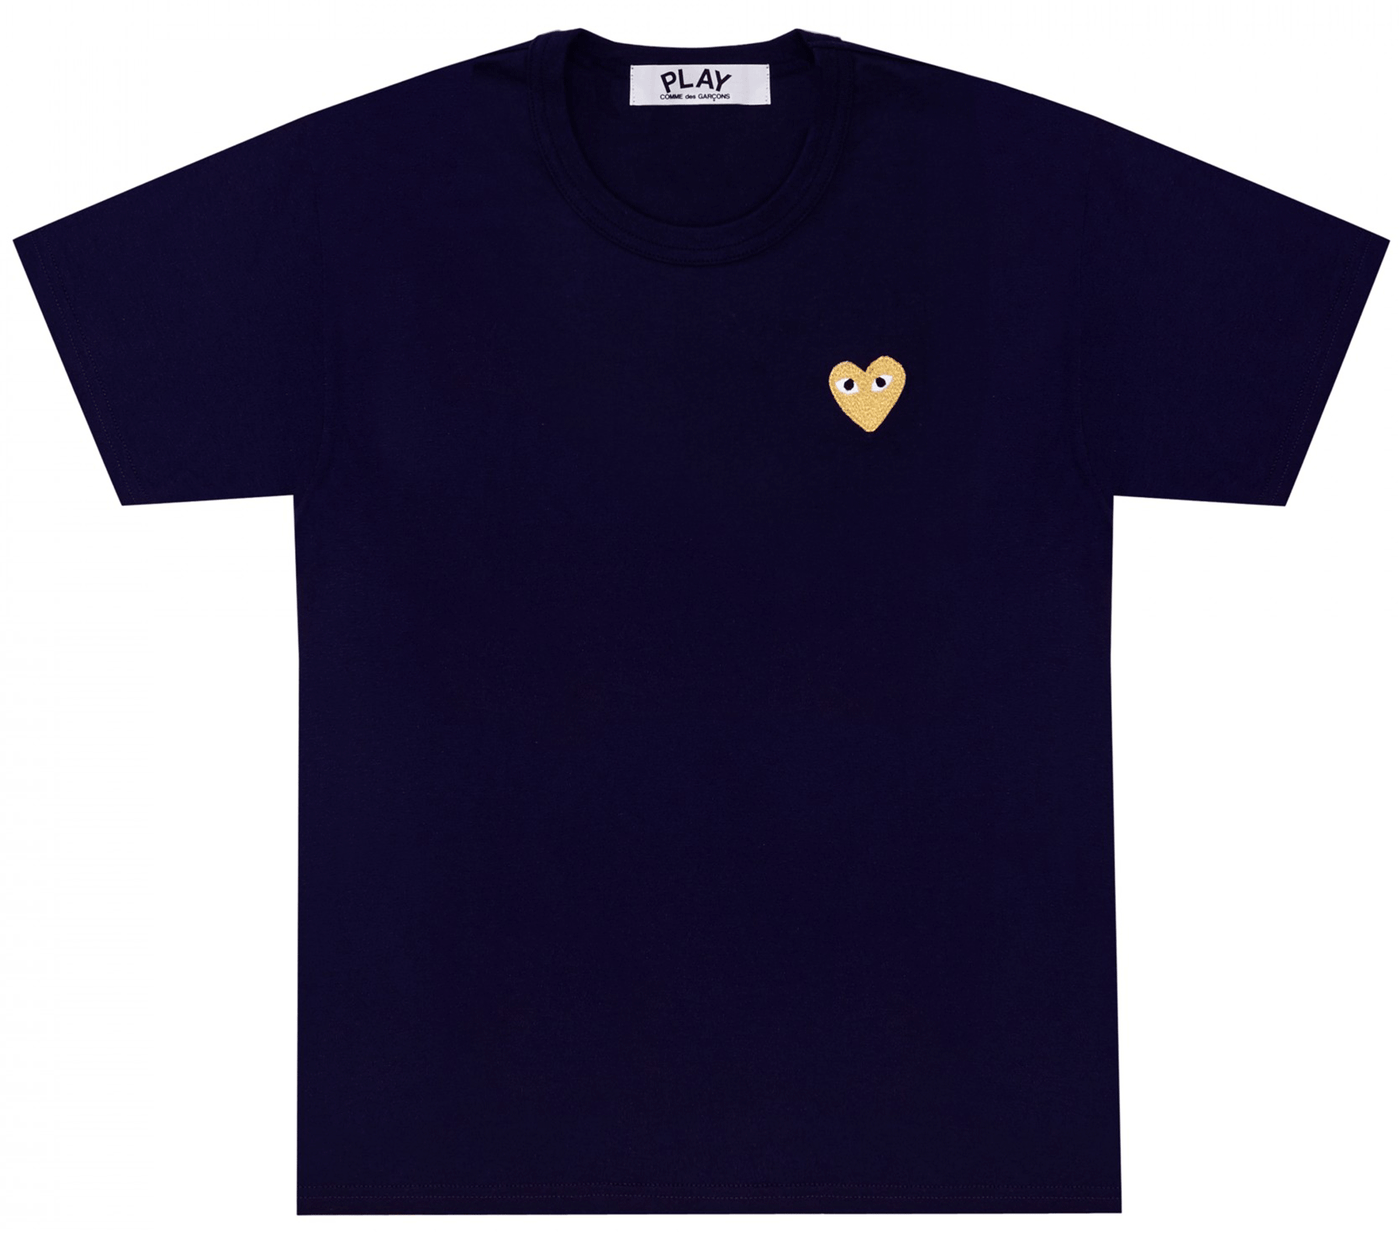 Comme-des-Garcons-Play-T-Shirt-With-Gold-Emblem-Women-Blue-1